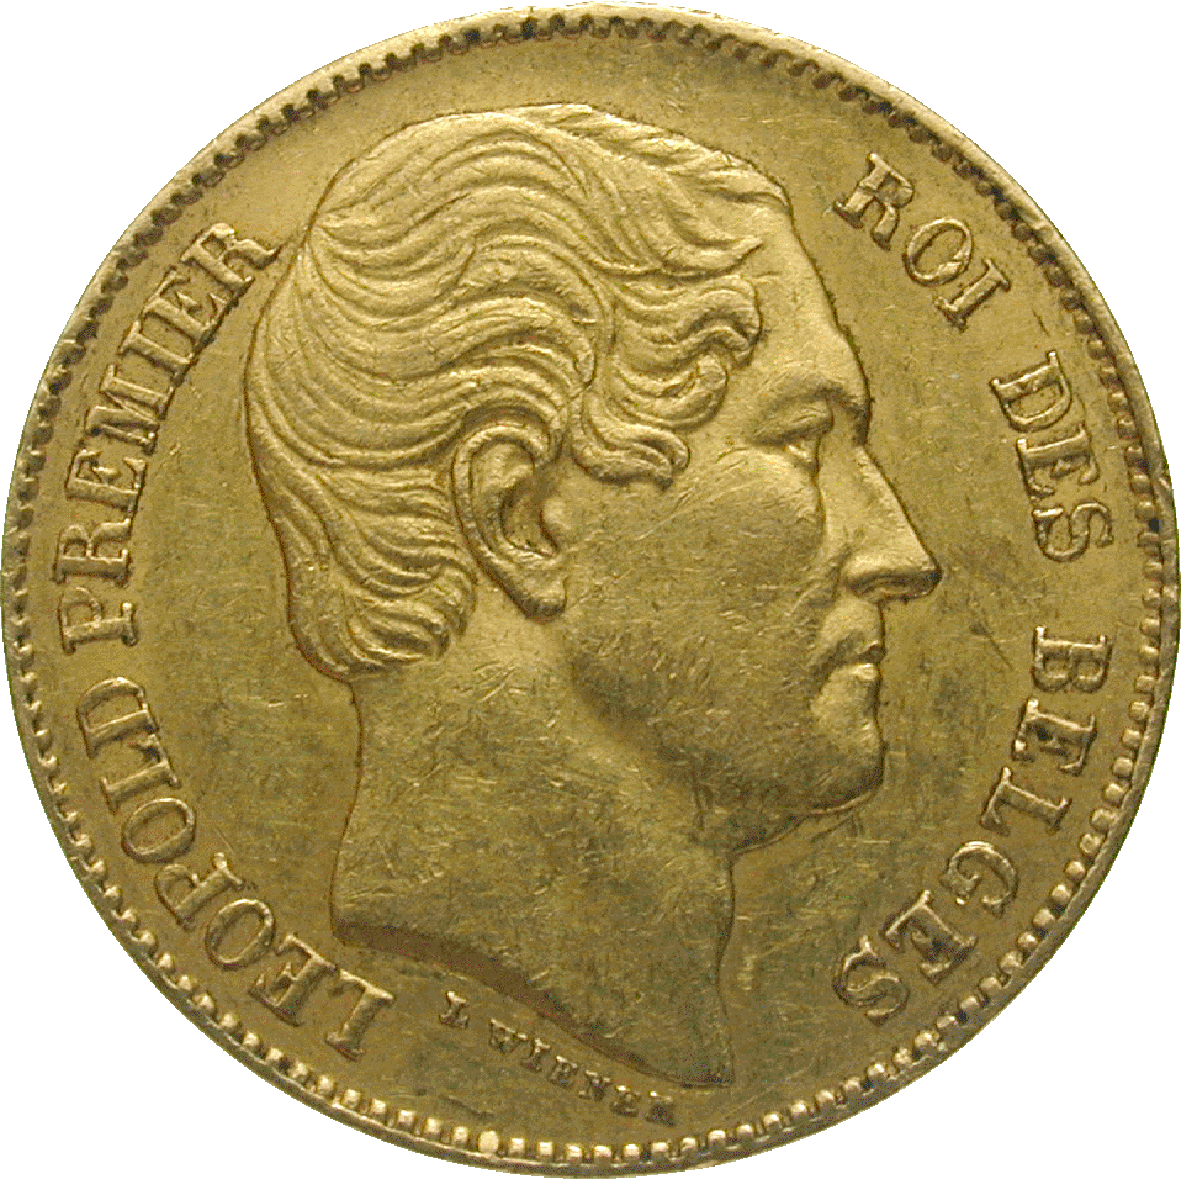 Kingdom of Belgium, Leopold I, 20 Francs 1865 (obverse)